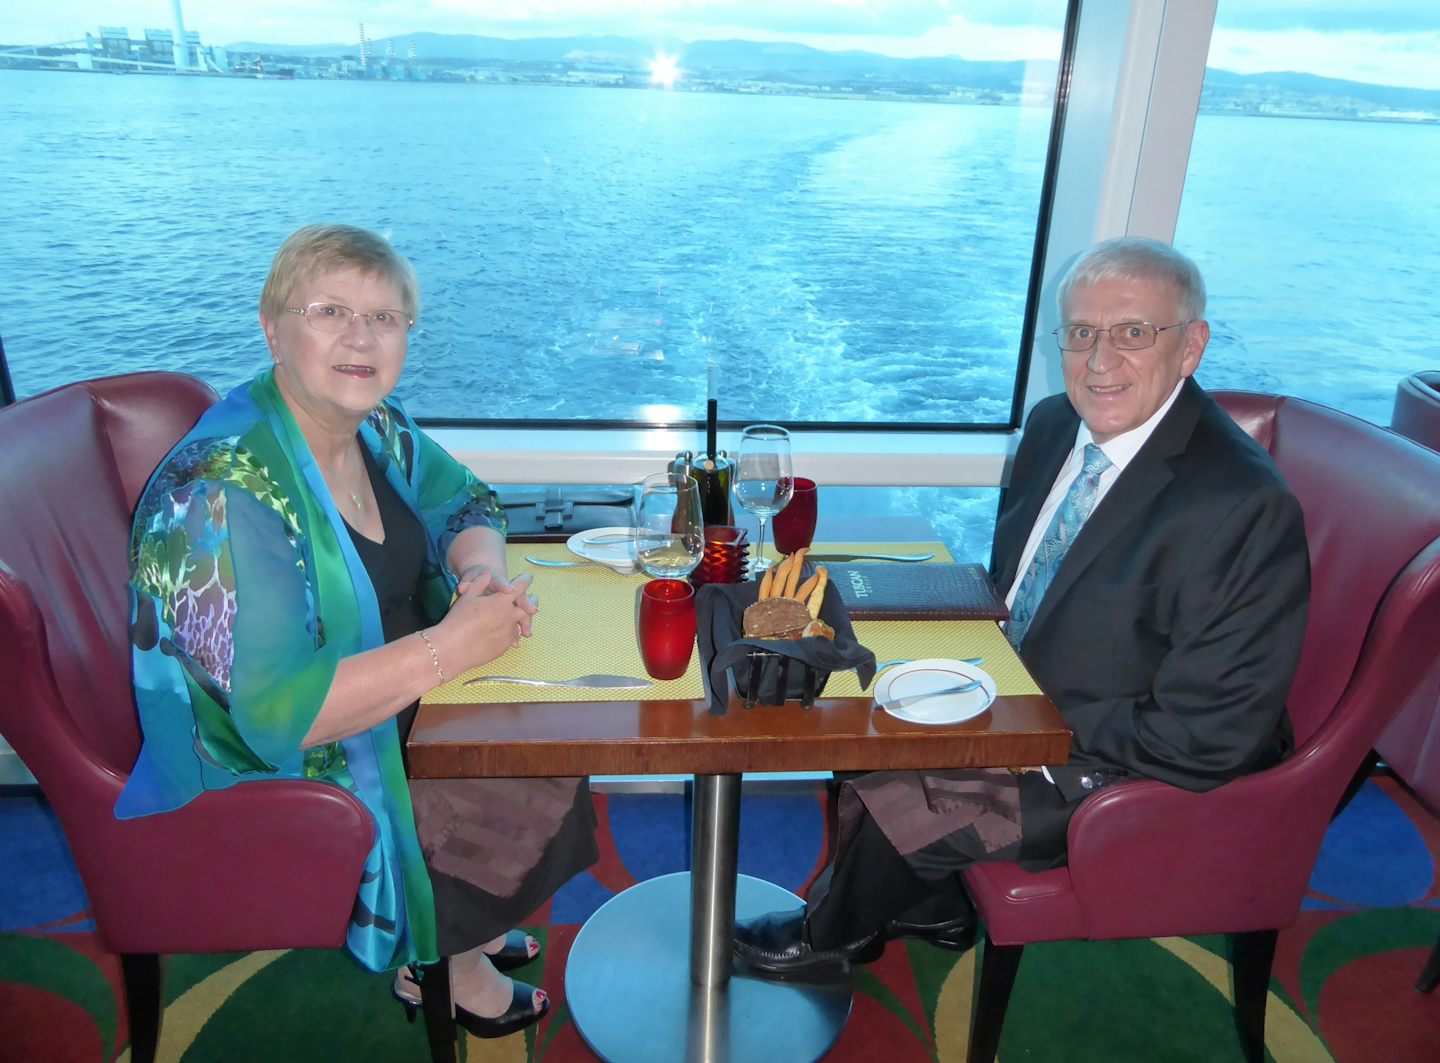 50th Anniversary Dinner aboard Celebrity "Equinox"